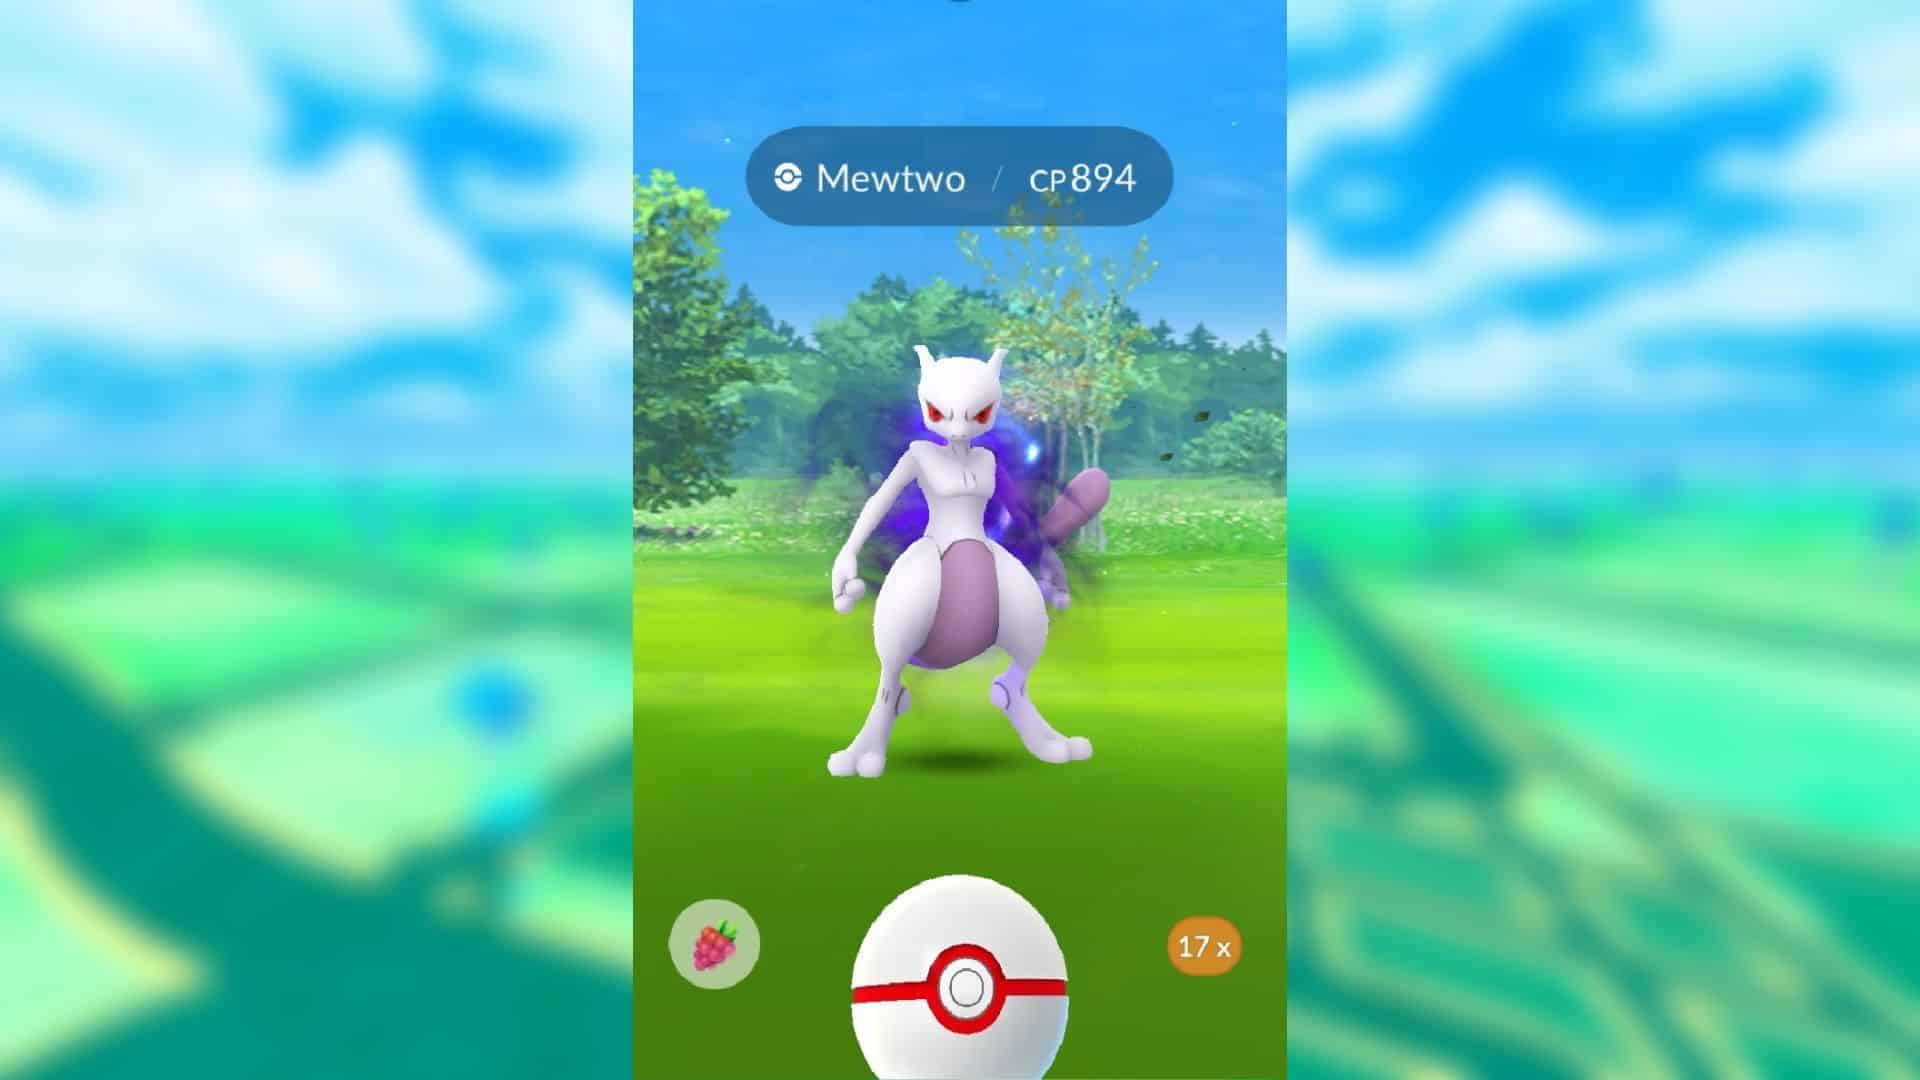 Pokémon Go Ultra Beast Protection Efforts quest steps